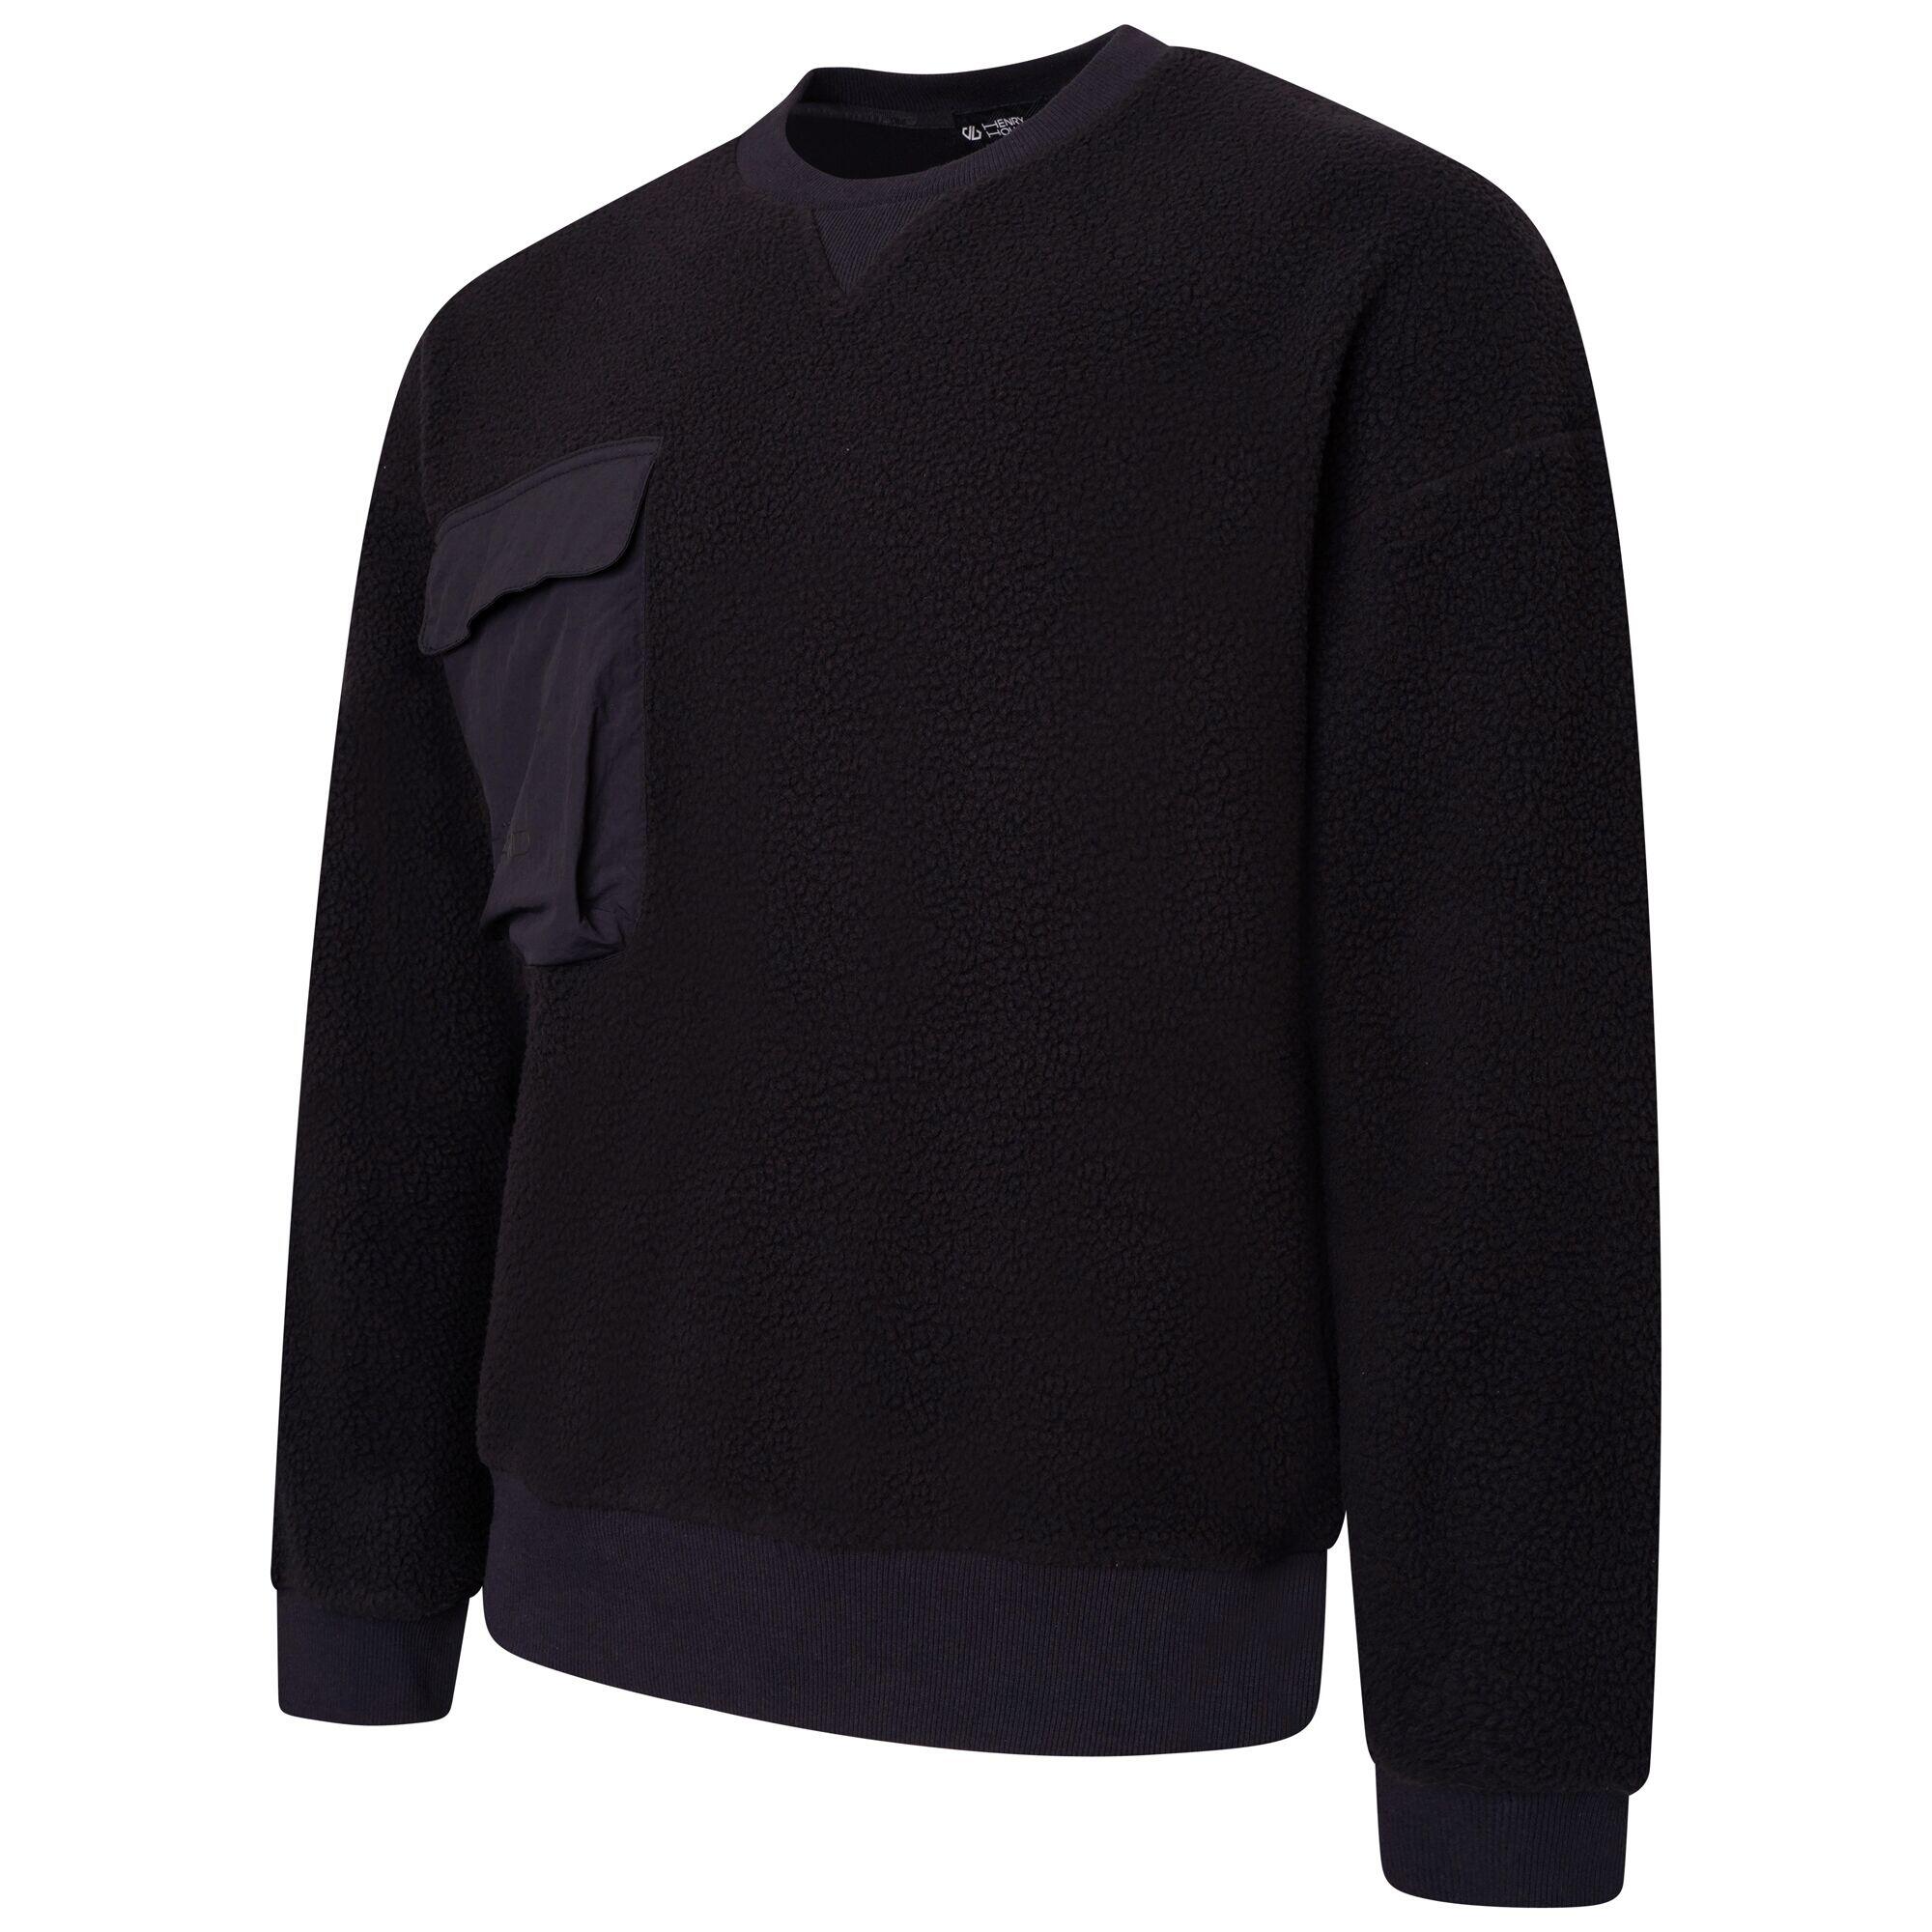 Henry Holland Wind Down Adult's Gym Overhead Sweatshirt - Black 2/5